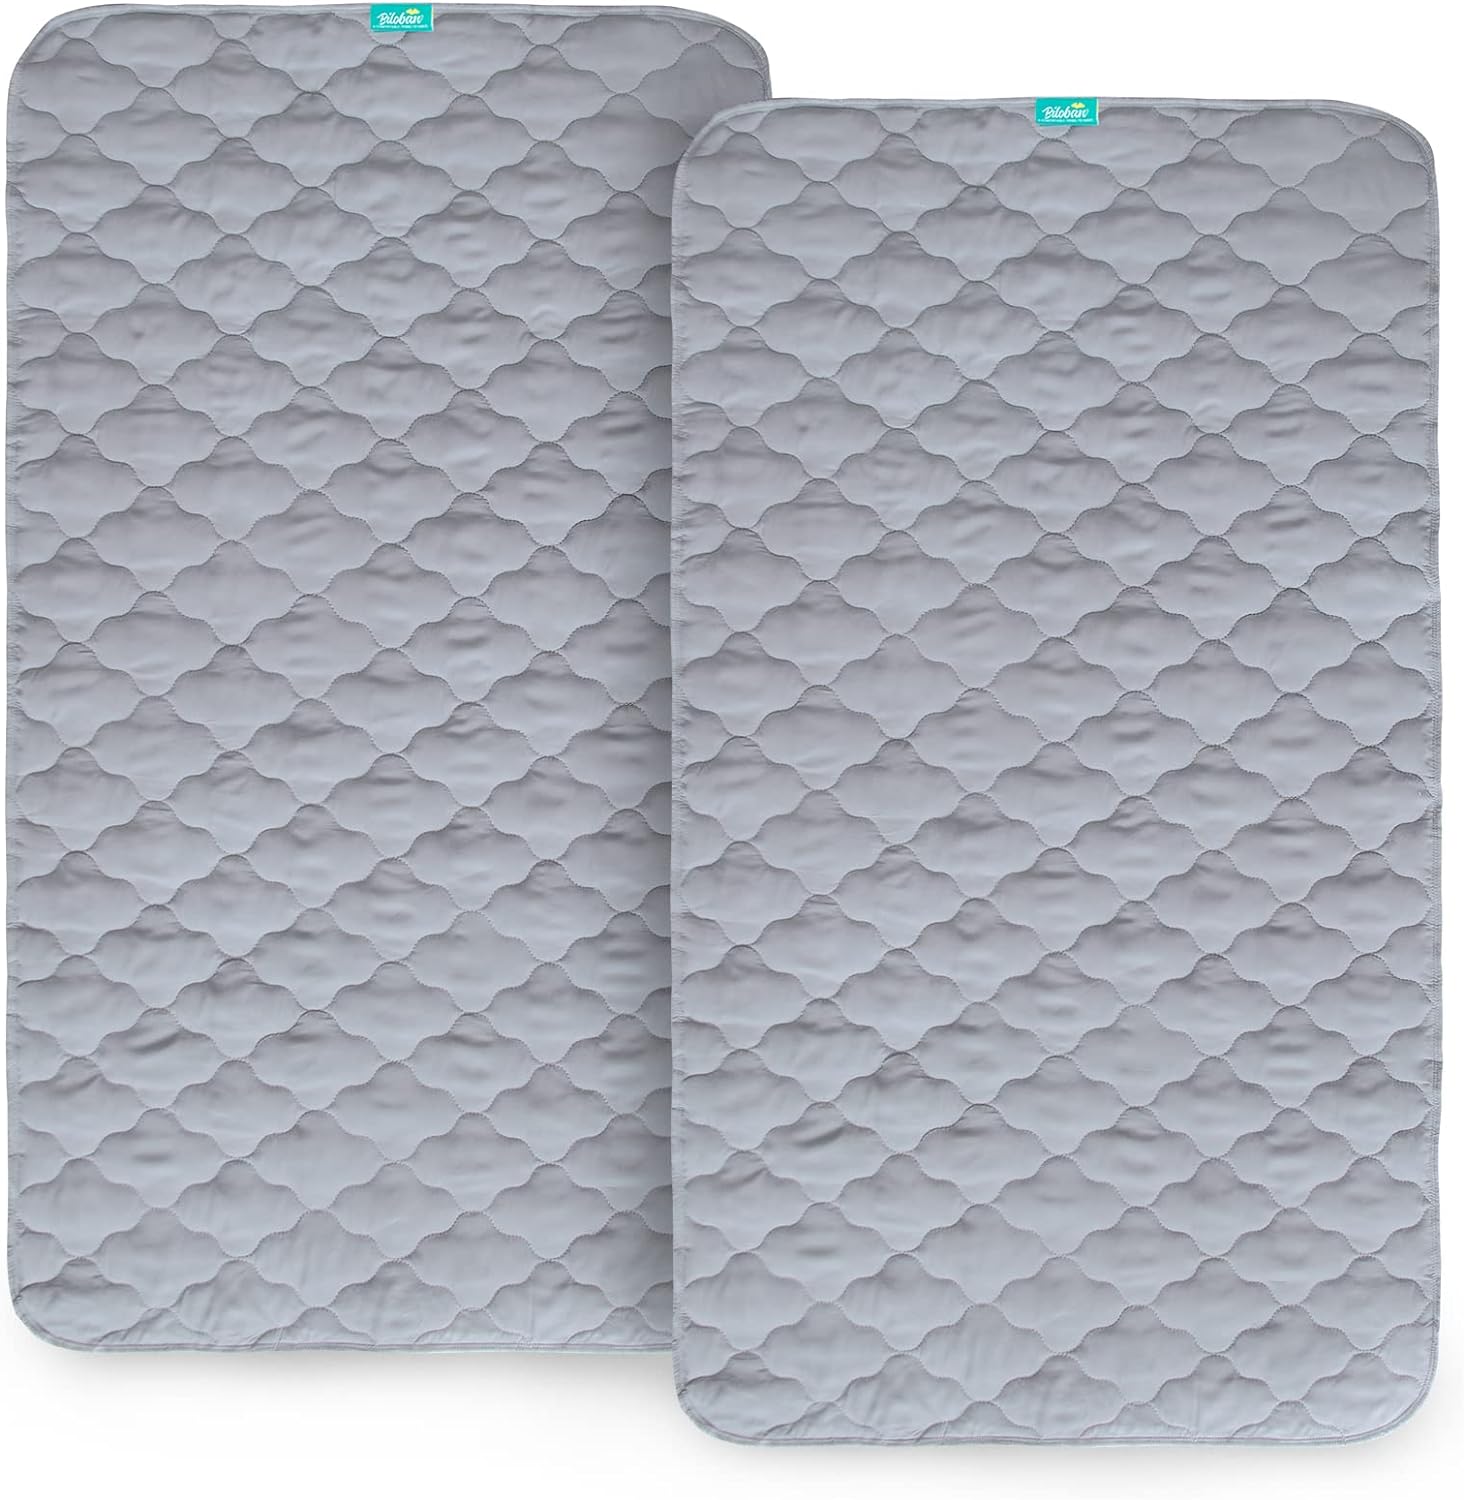 Waterproof Crib Mattress Protector Pad | Bed Pad Mat - 52" x 28", Anti Slip & Durable, Grey, 2 Pack - Biloban Online Store